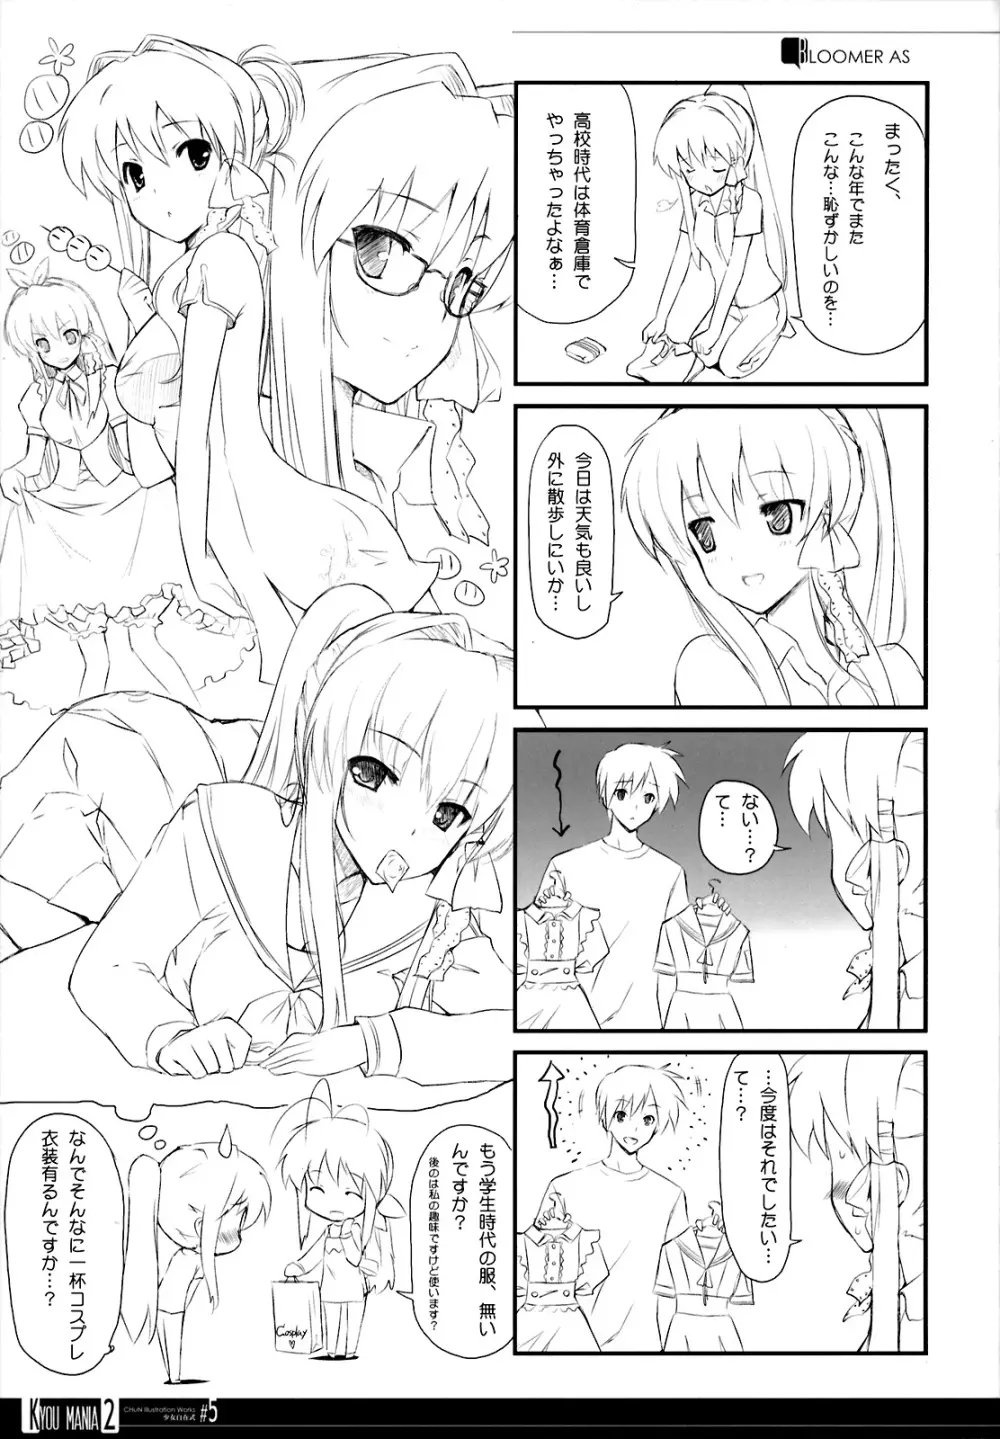 KYOU MANIA 2 - page22